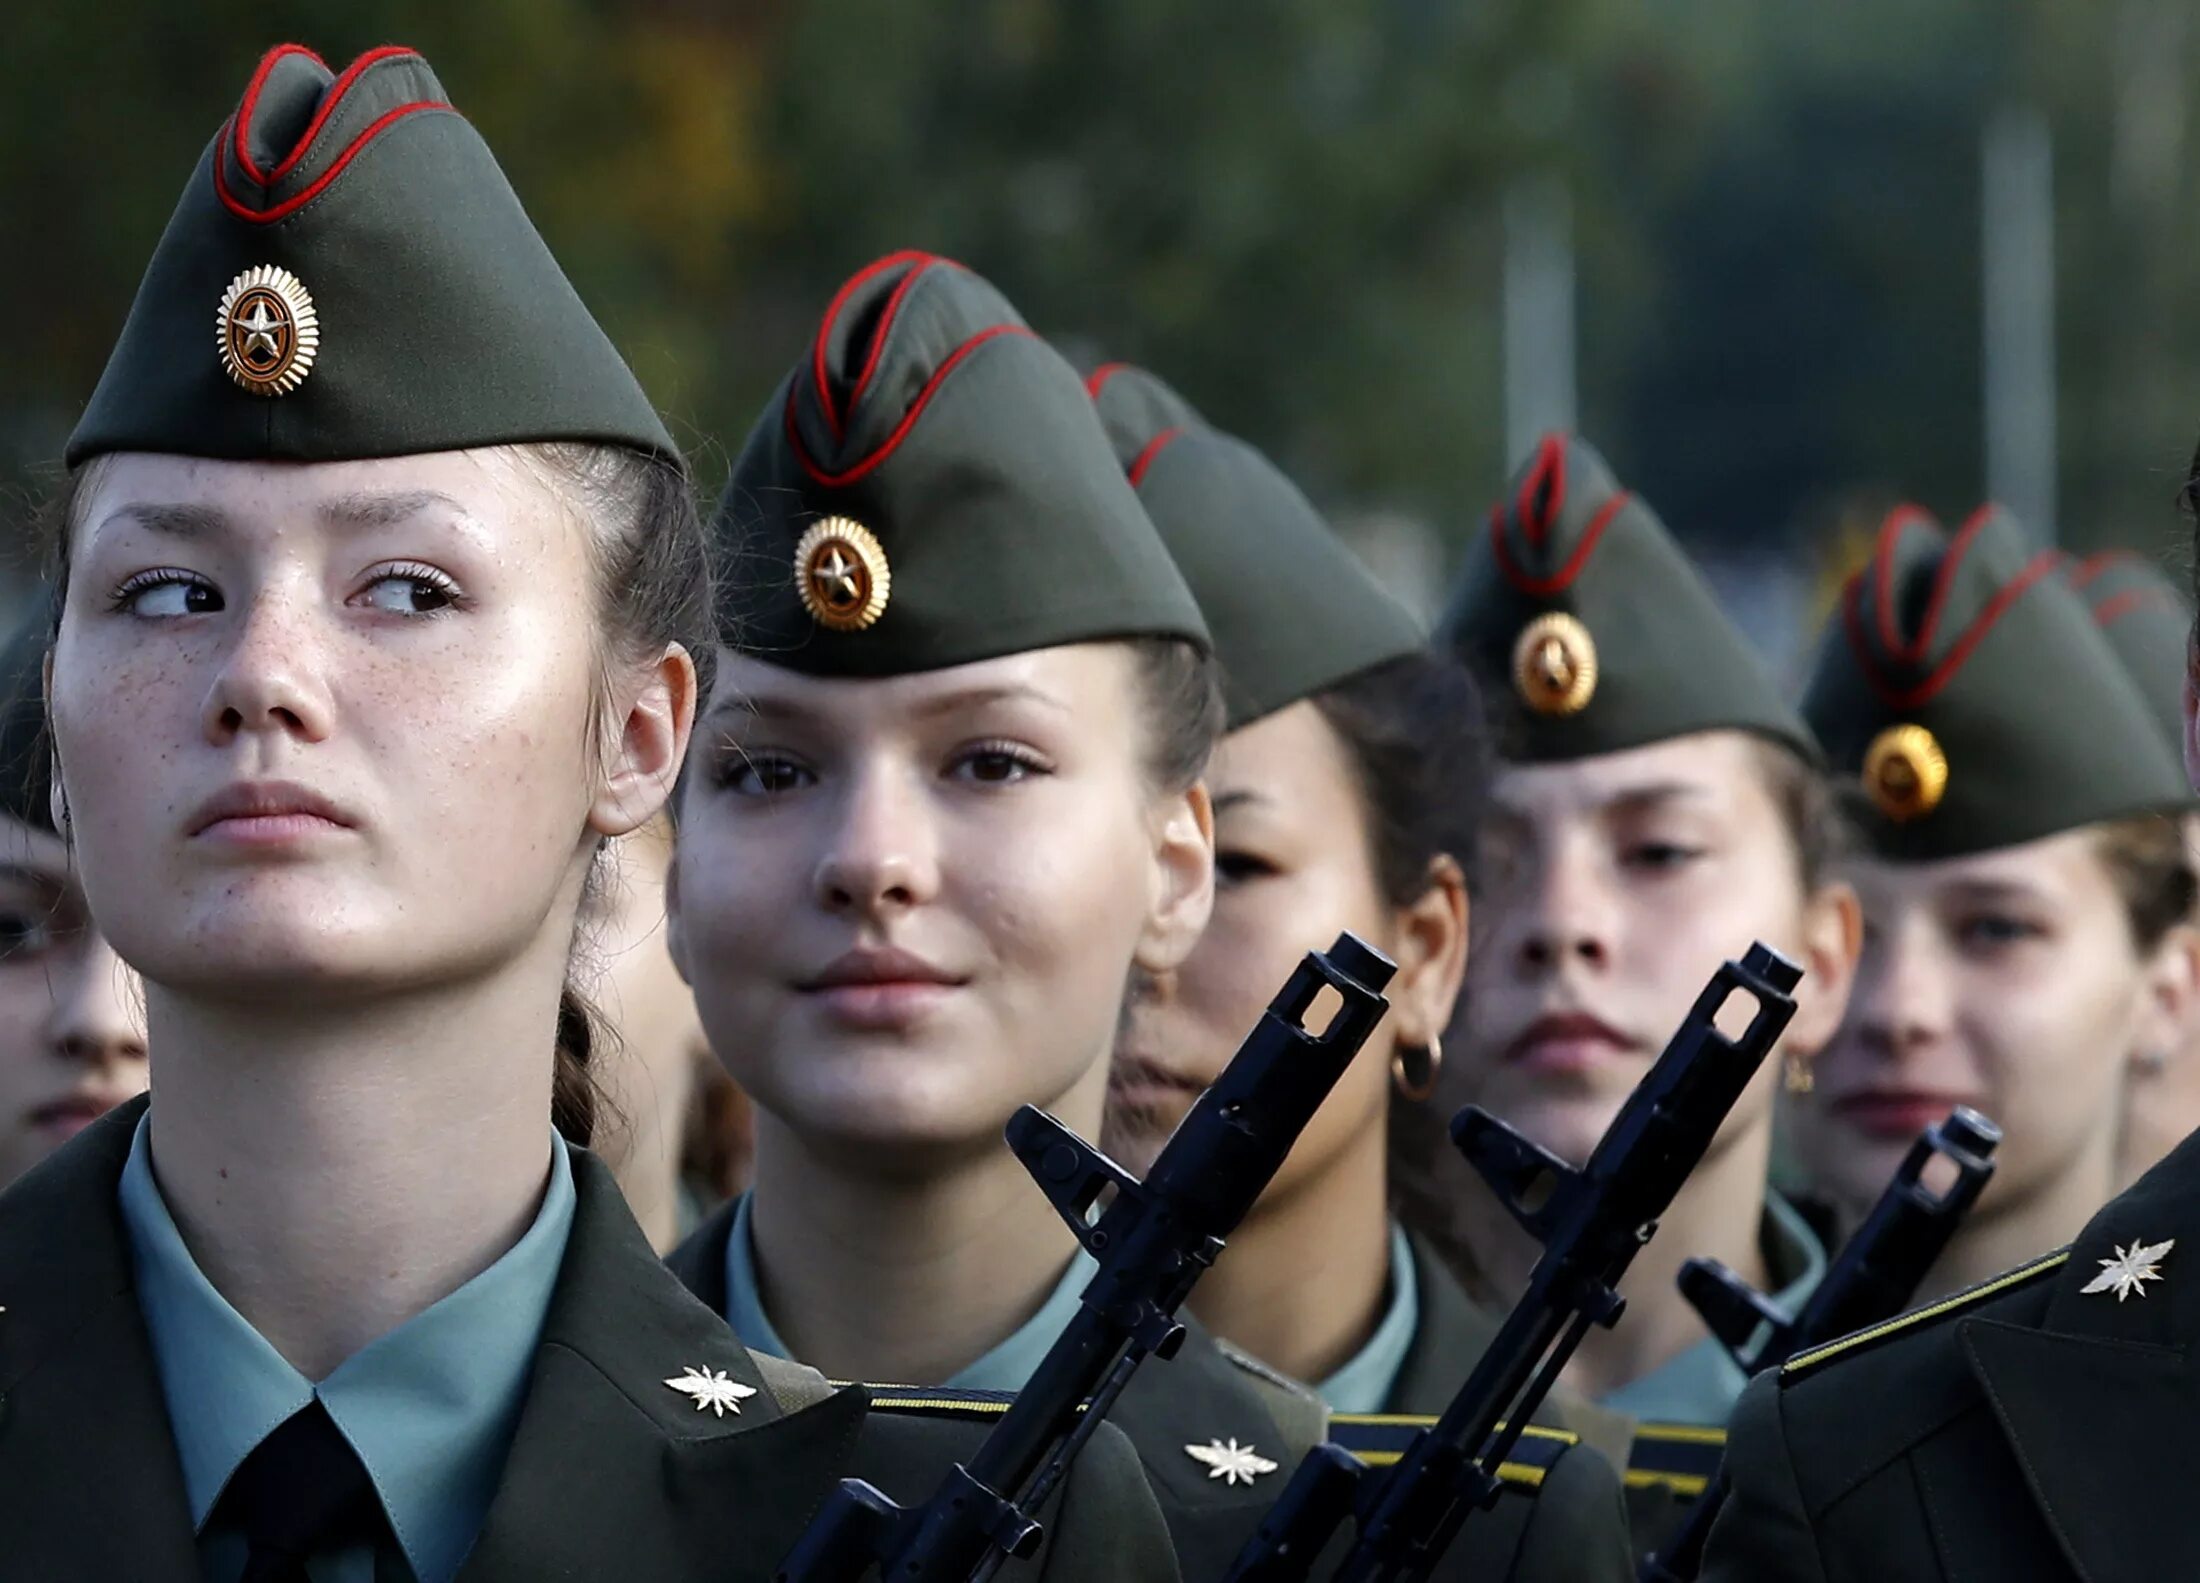 Армейская женщина. Женщины военные. Женщины военнослужащие. Женщины военные в России. Женщины военнослужащие в России.